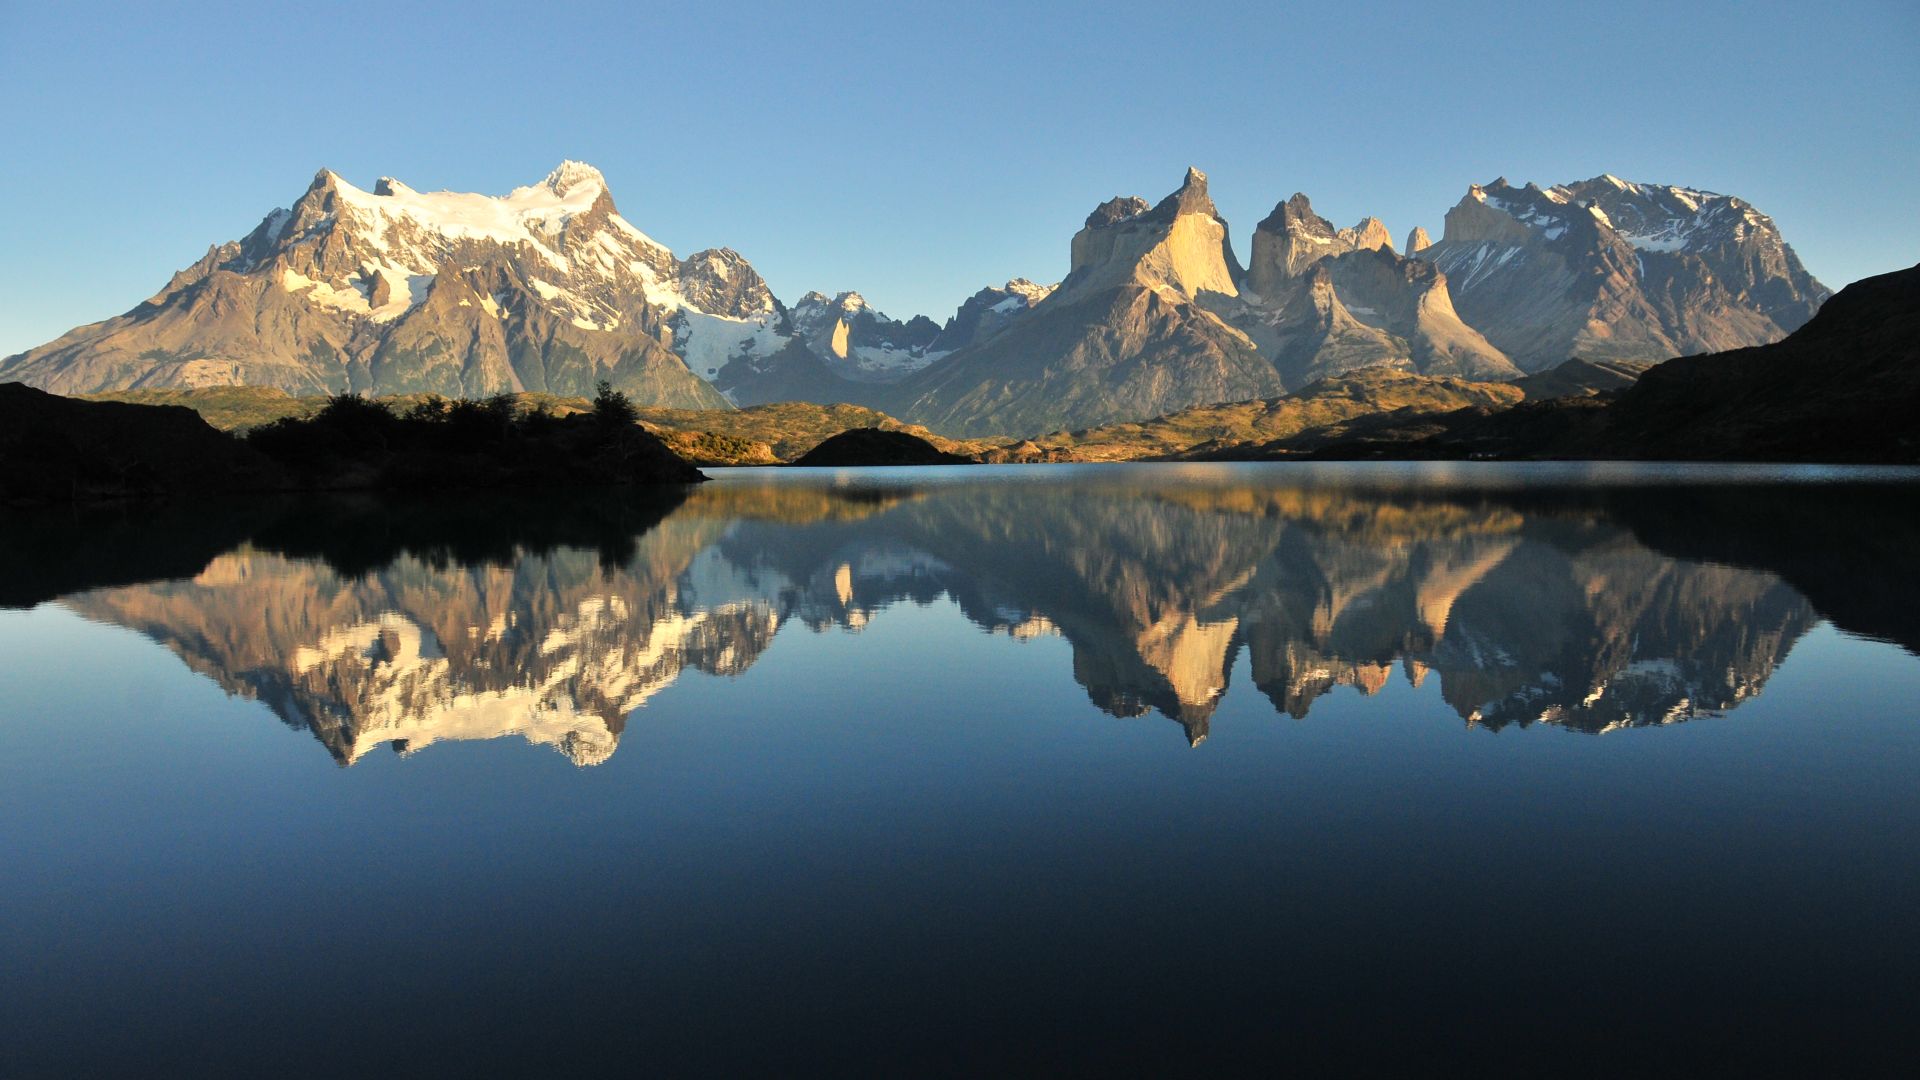 озеро Грей, Торрес-дель-Пайне, горы, Lake Gray, Torres del Paine, Chile, mountains, 4k (horizontal)